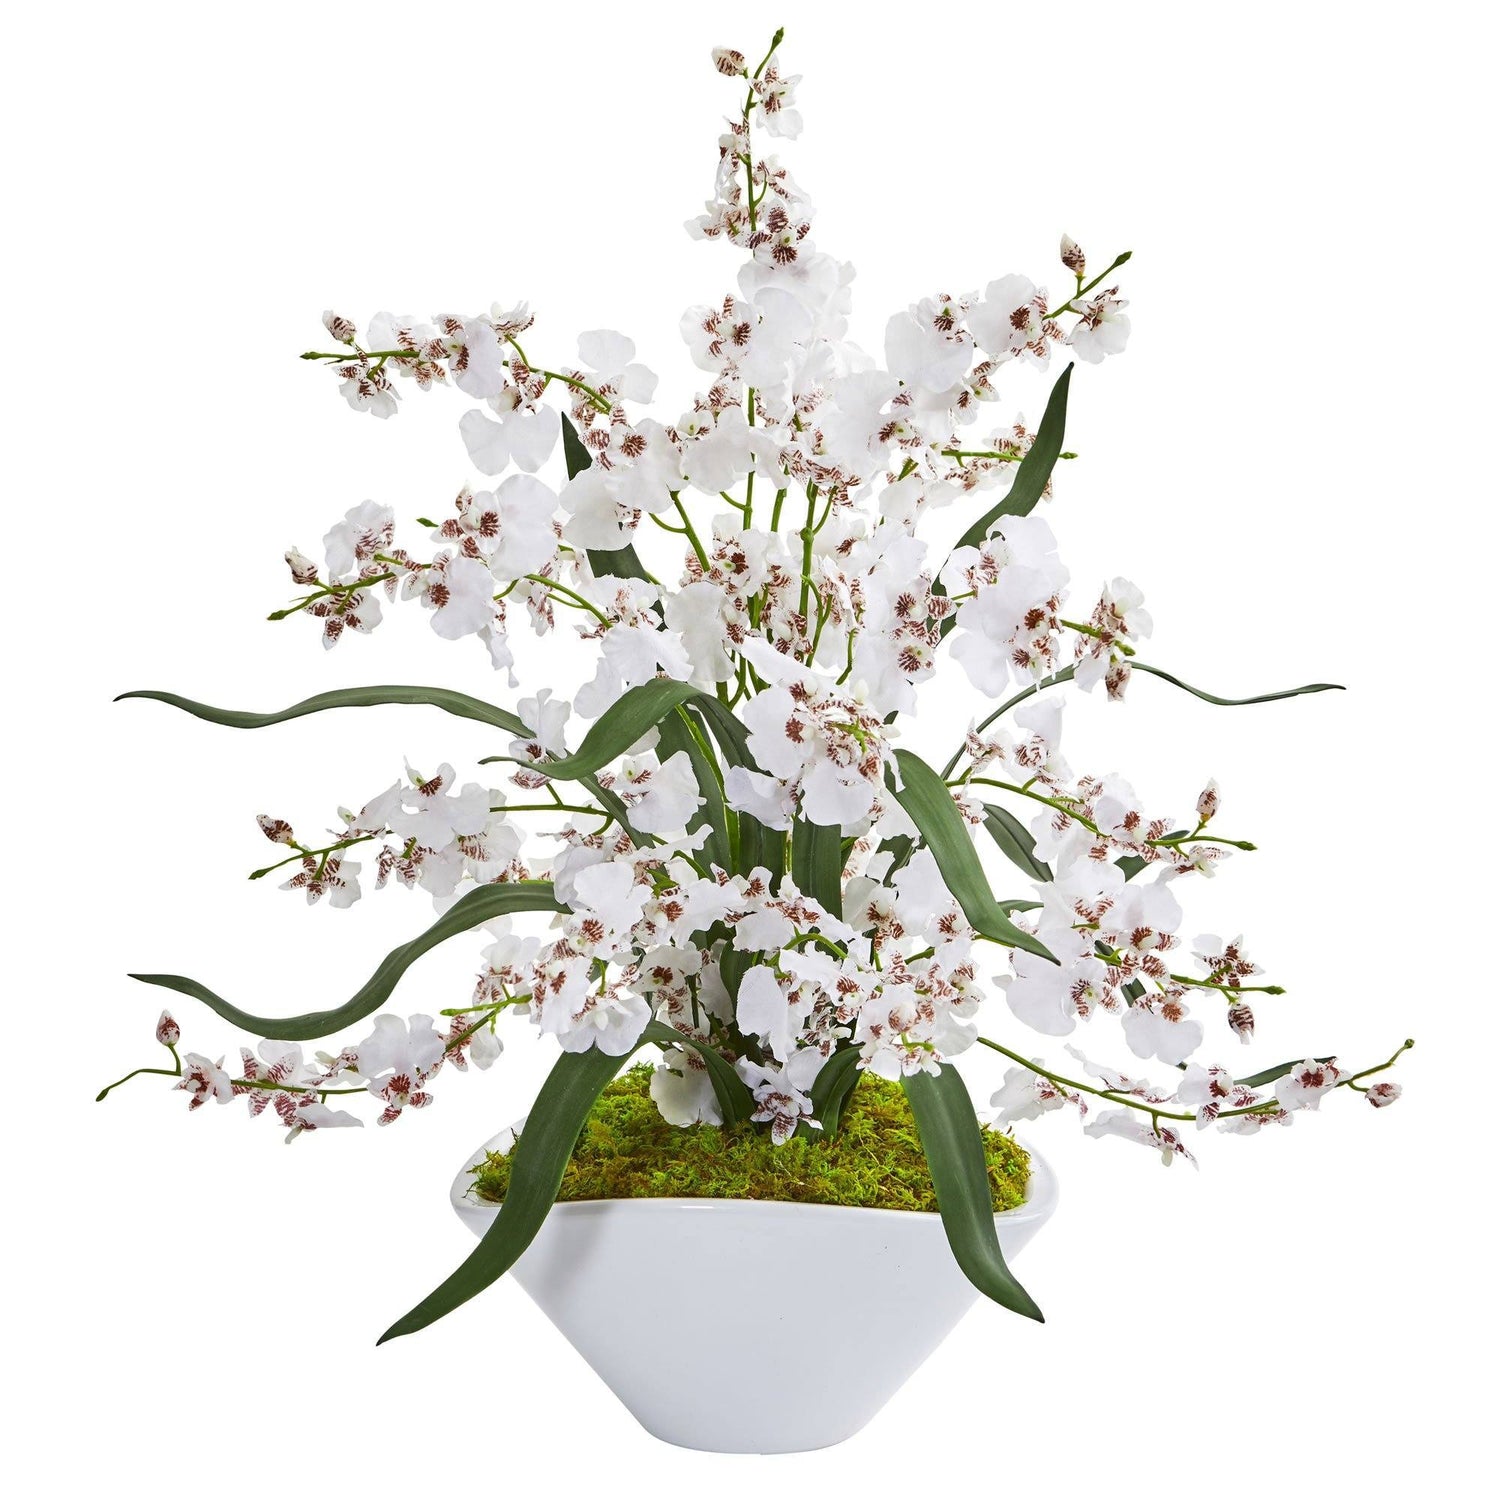 Dancing Lady Orchid Artificial Arrangement in White Vase